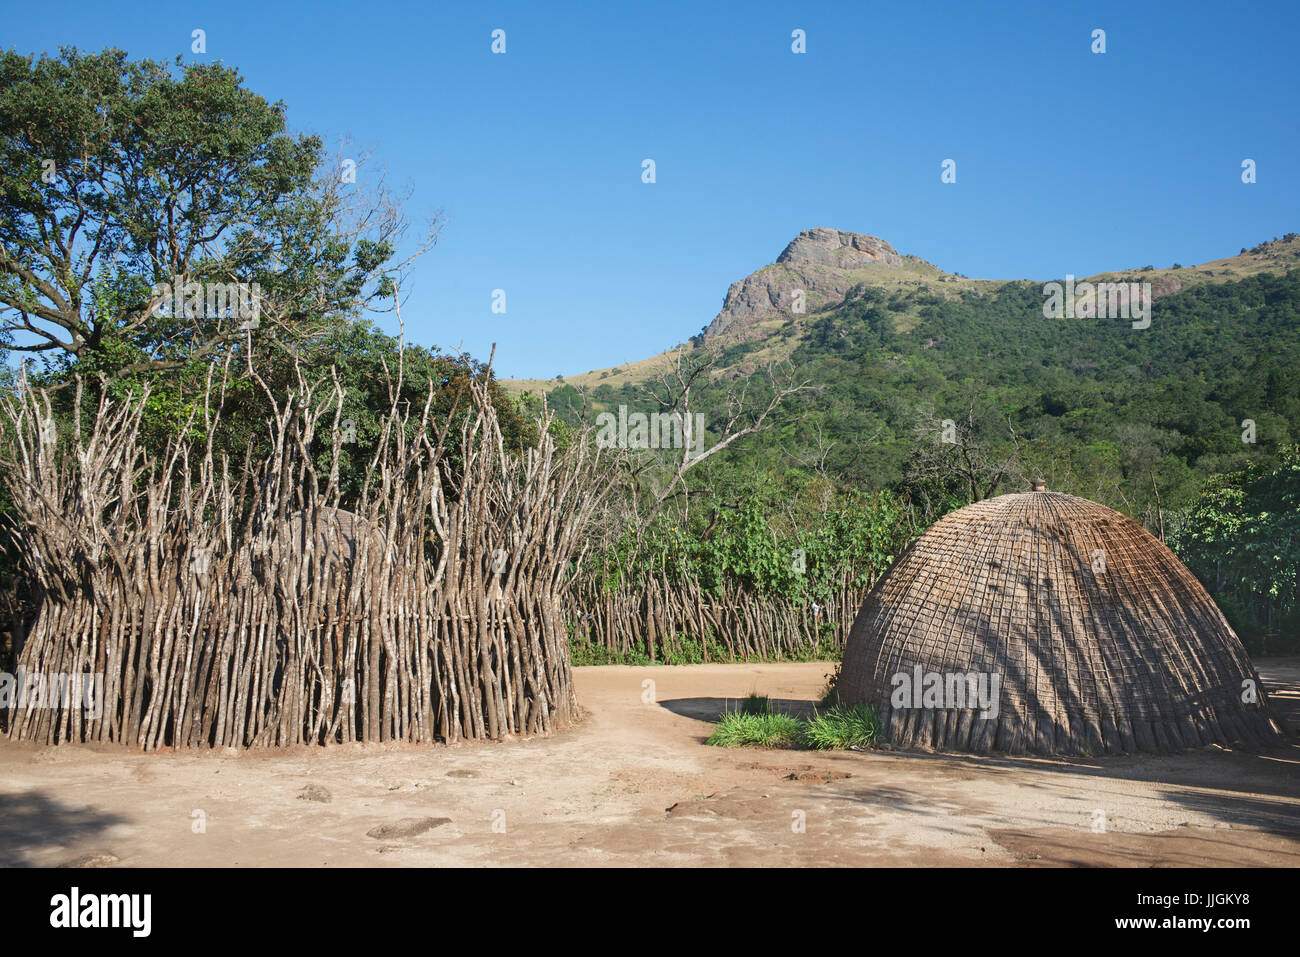 Traditionelles Dorf mit Bienenstock Hütte Mantenga Swasiland Südafrika Stockfoto